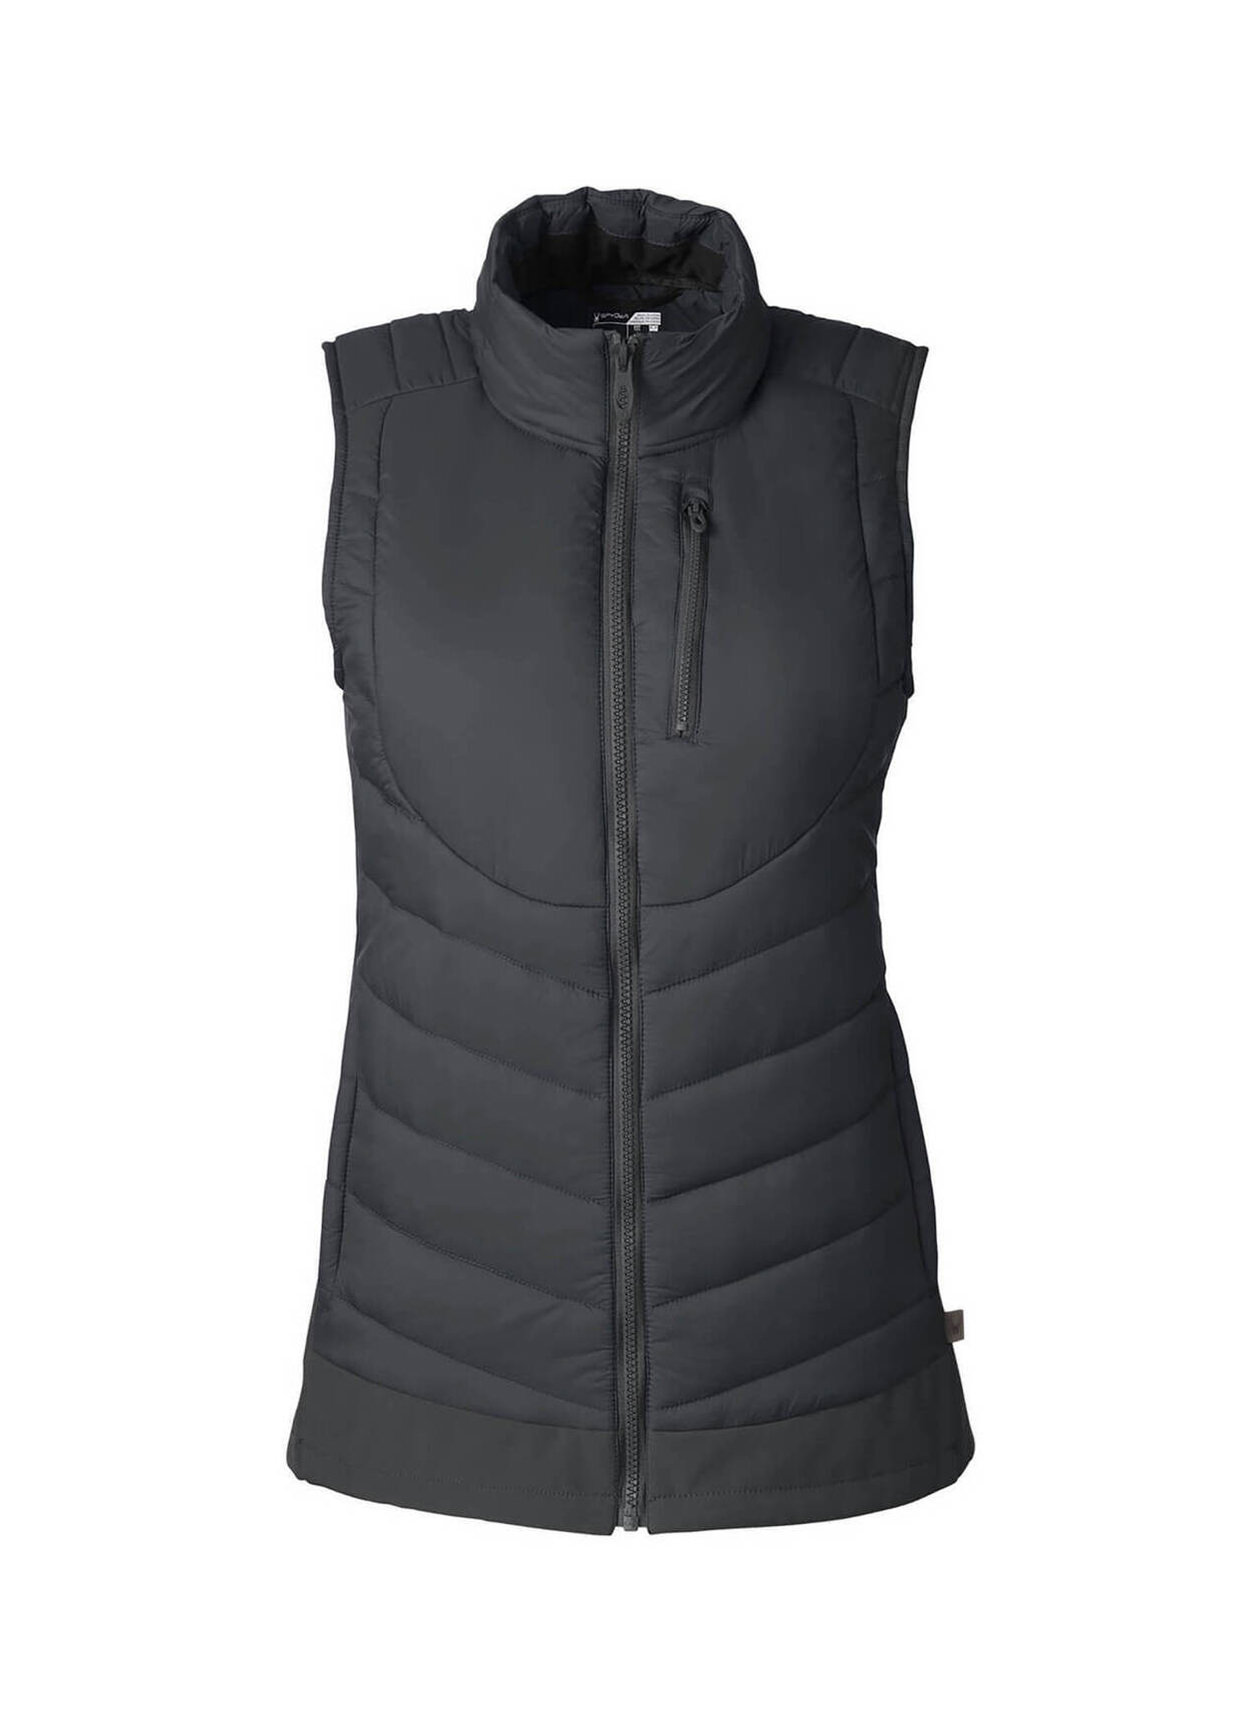 Spyder Women's Black Challenger Vest